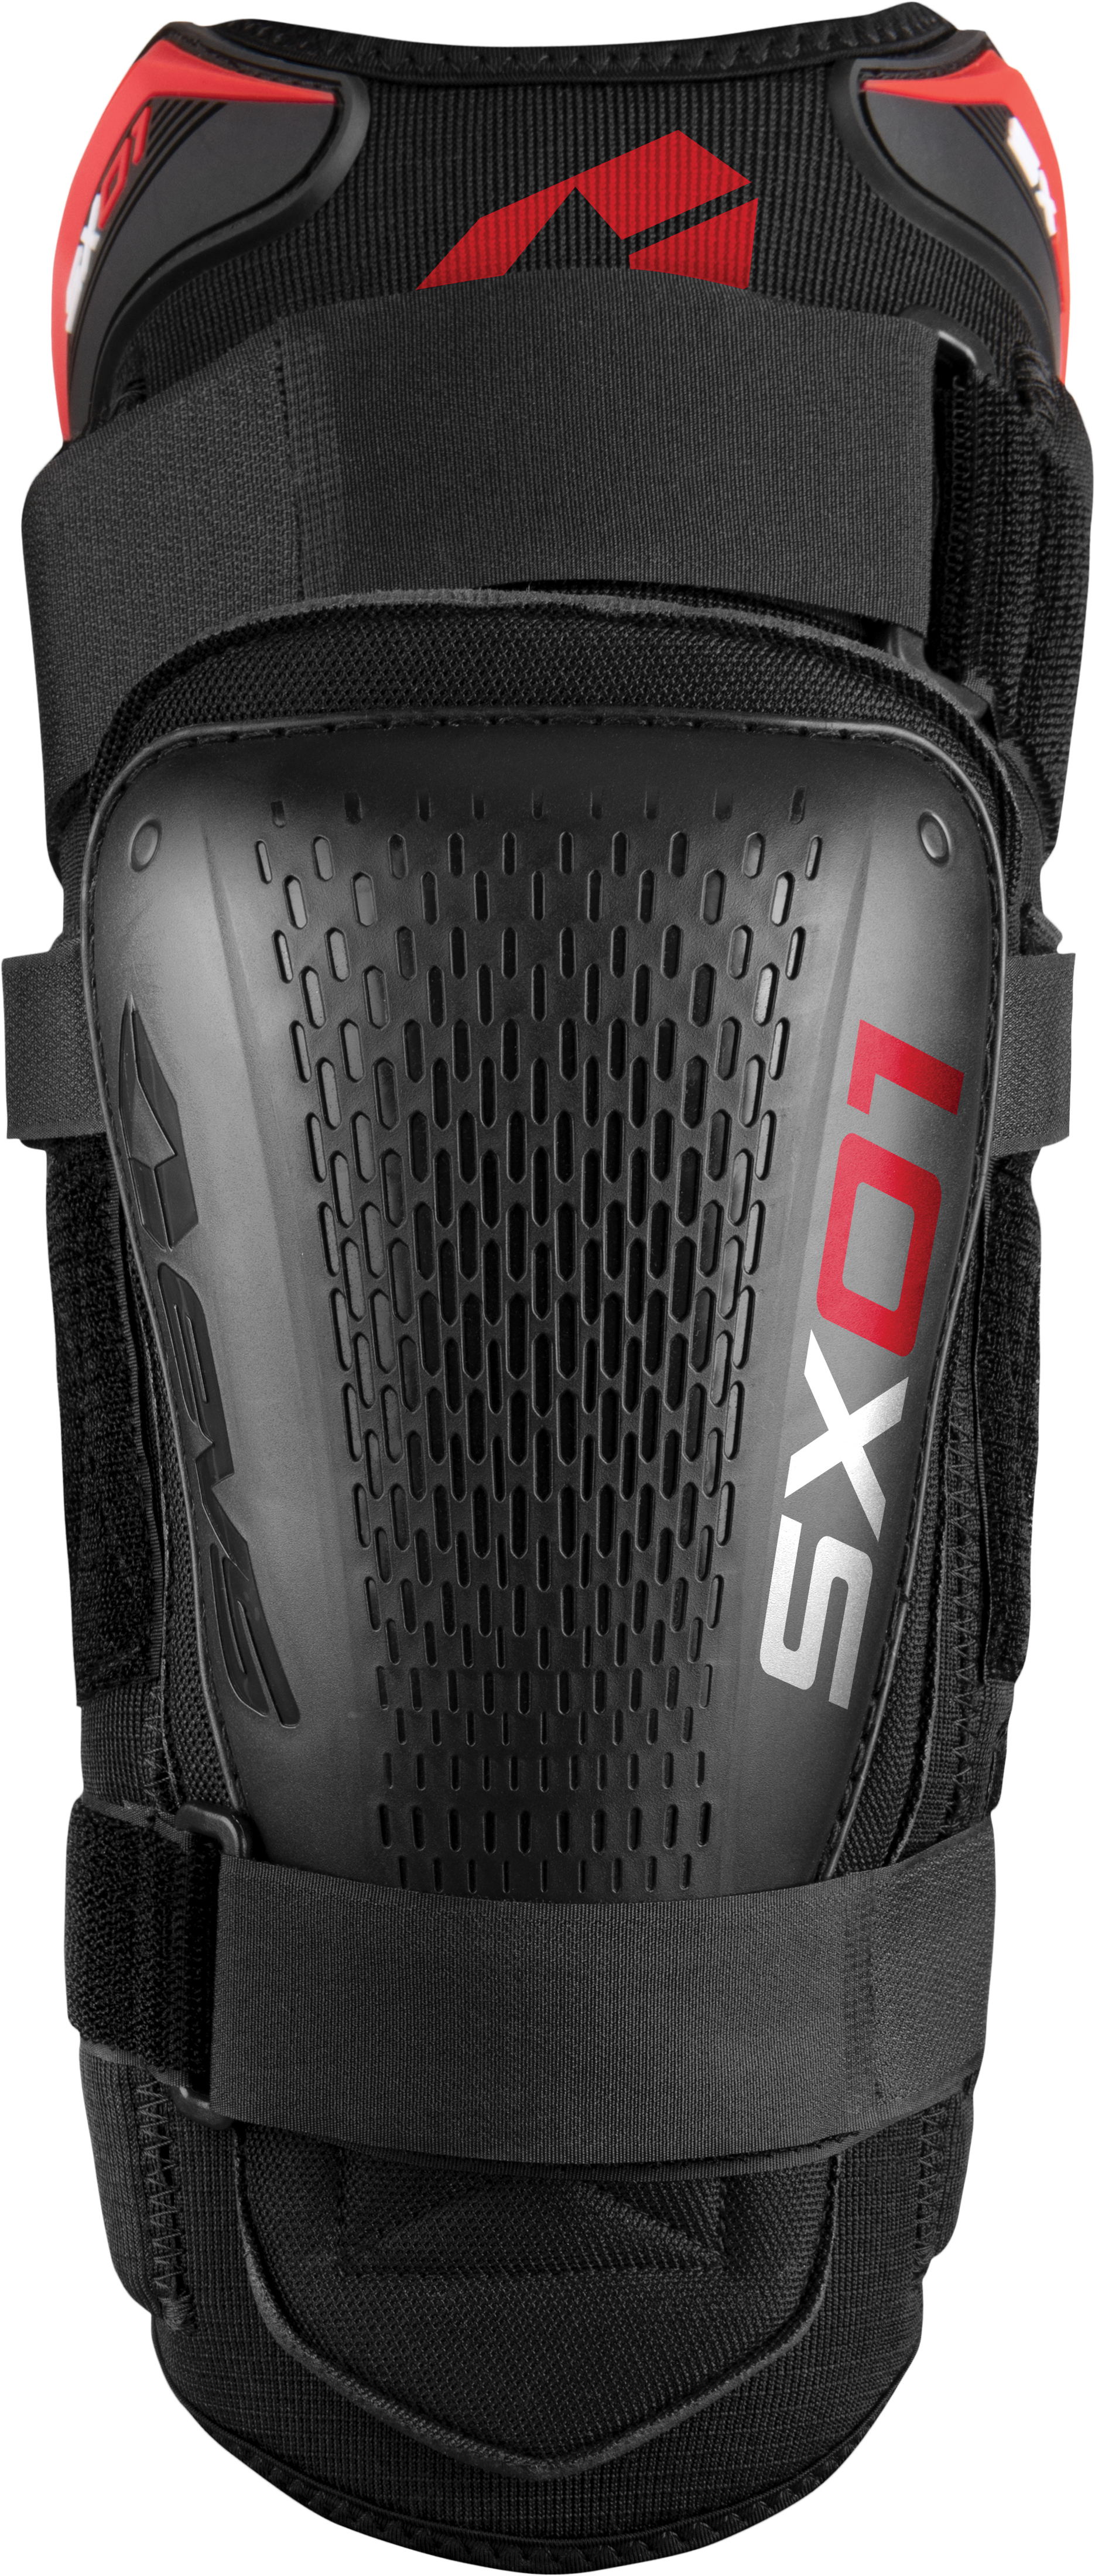 SX01 Knee Brace - Single, Black X-Large - Click Image to Close